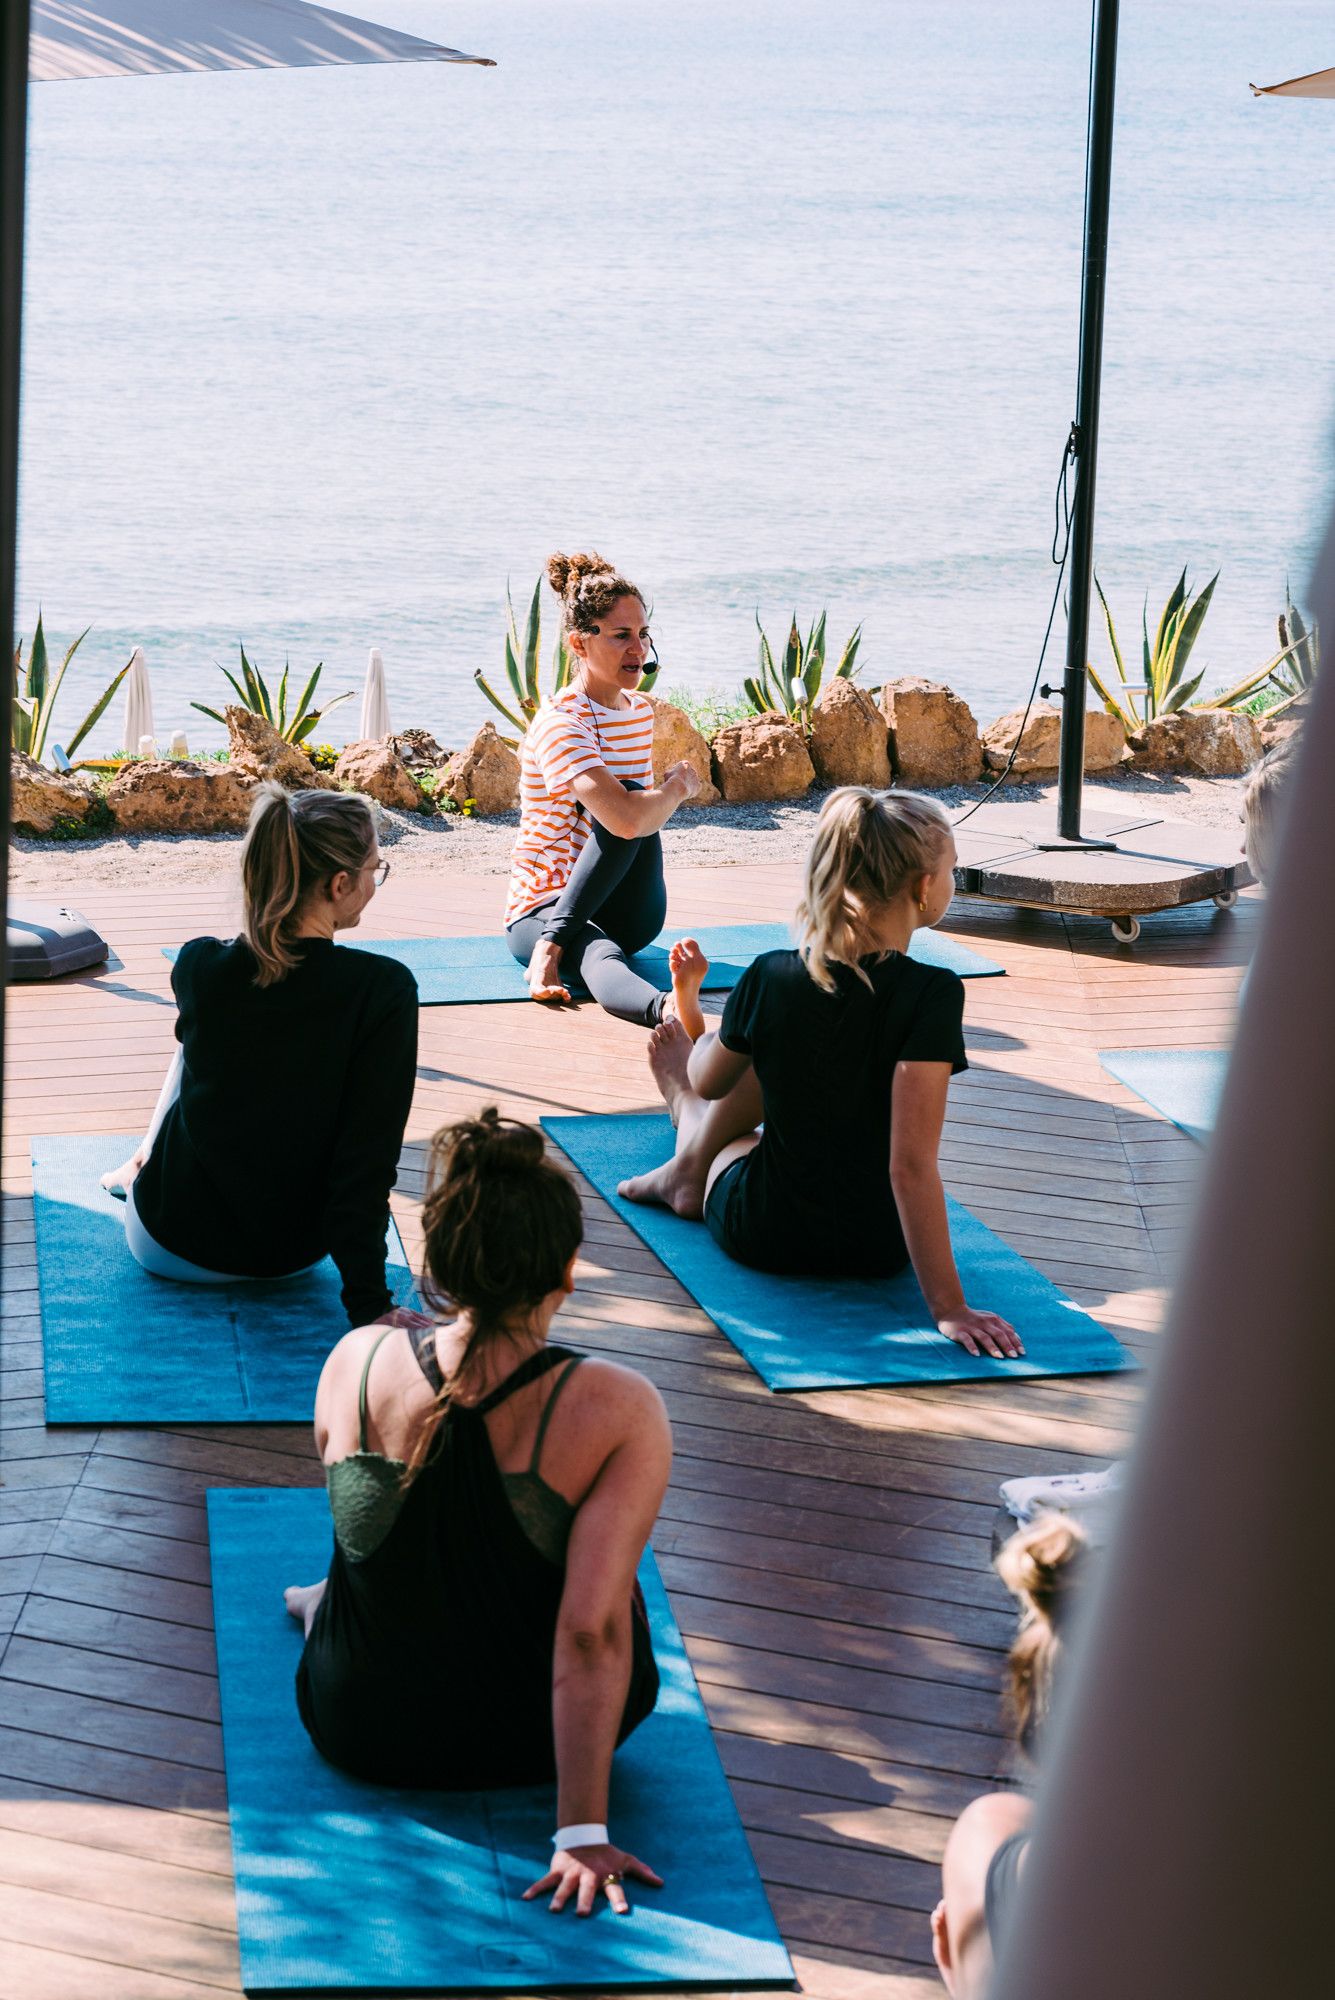 Clases de yoga con vistas al mar en Aiyanna Ibiza, en Cala Nova.